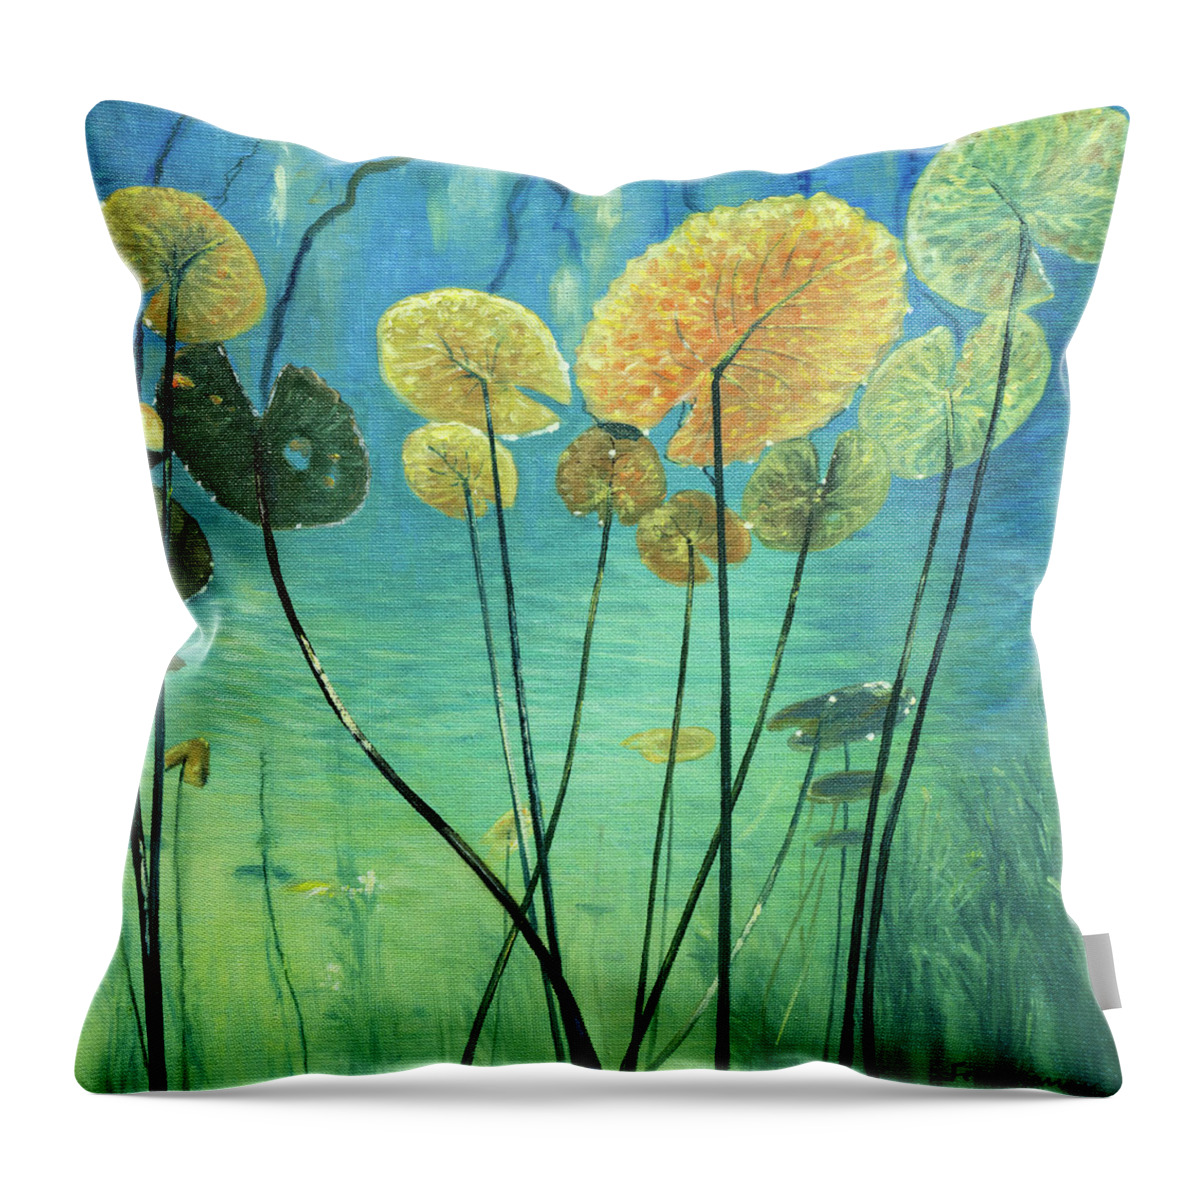 Water Lilies Throw Pillow featuring the painting Seerosen, Teichrosen by Uwe Fehrmann